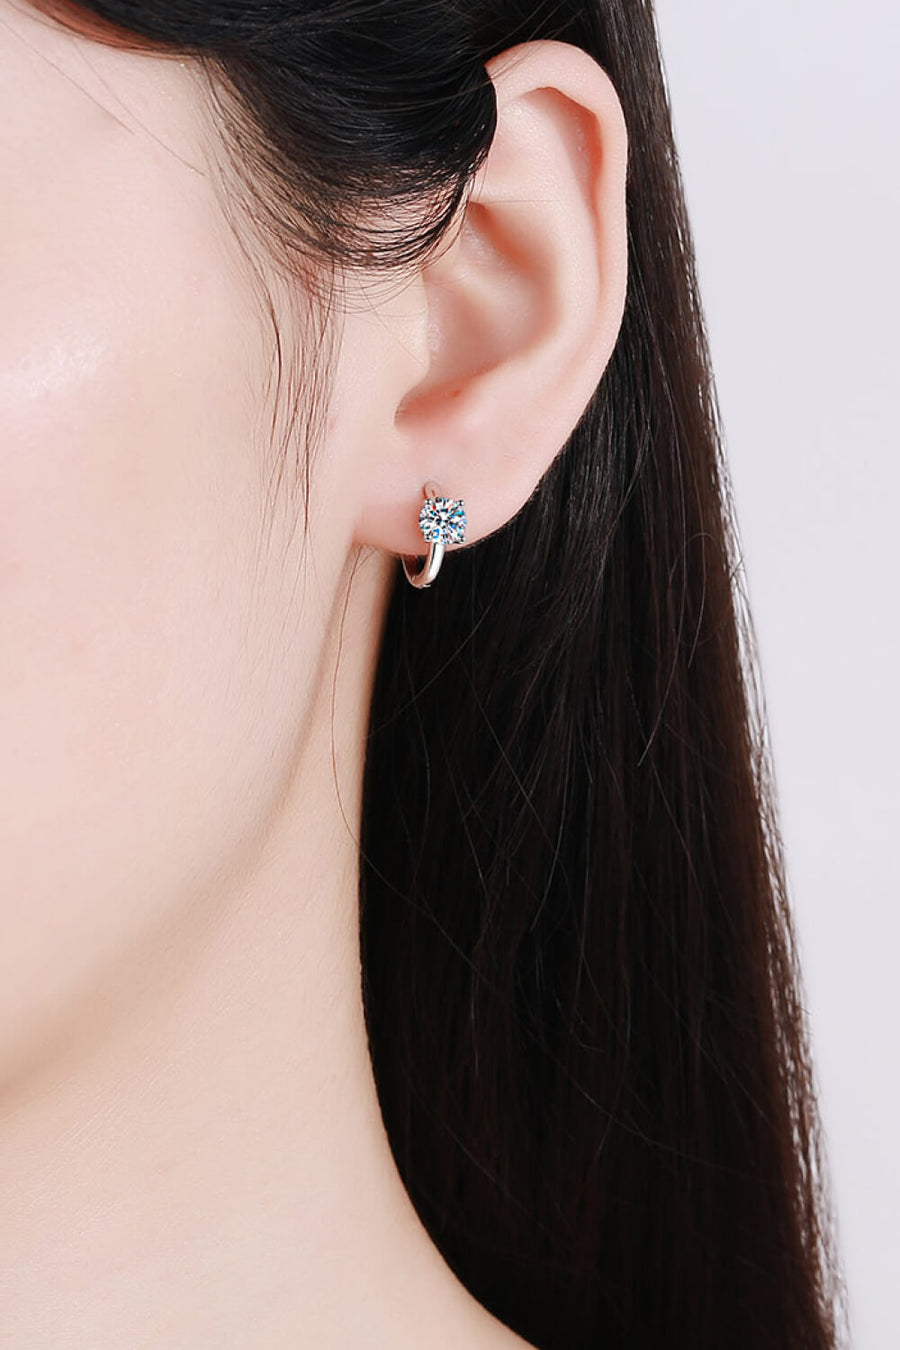 1# BEST Diamond Hoop Earrings Jewelry Gifts for Women | #1 Best Most Top Trendy Trending 1 Carat Diamond Huggie Earrings Gift for Women, Ladies | MASON New York